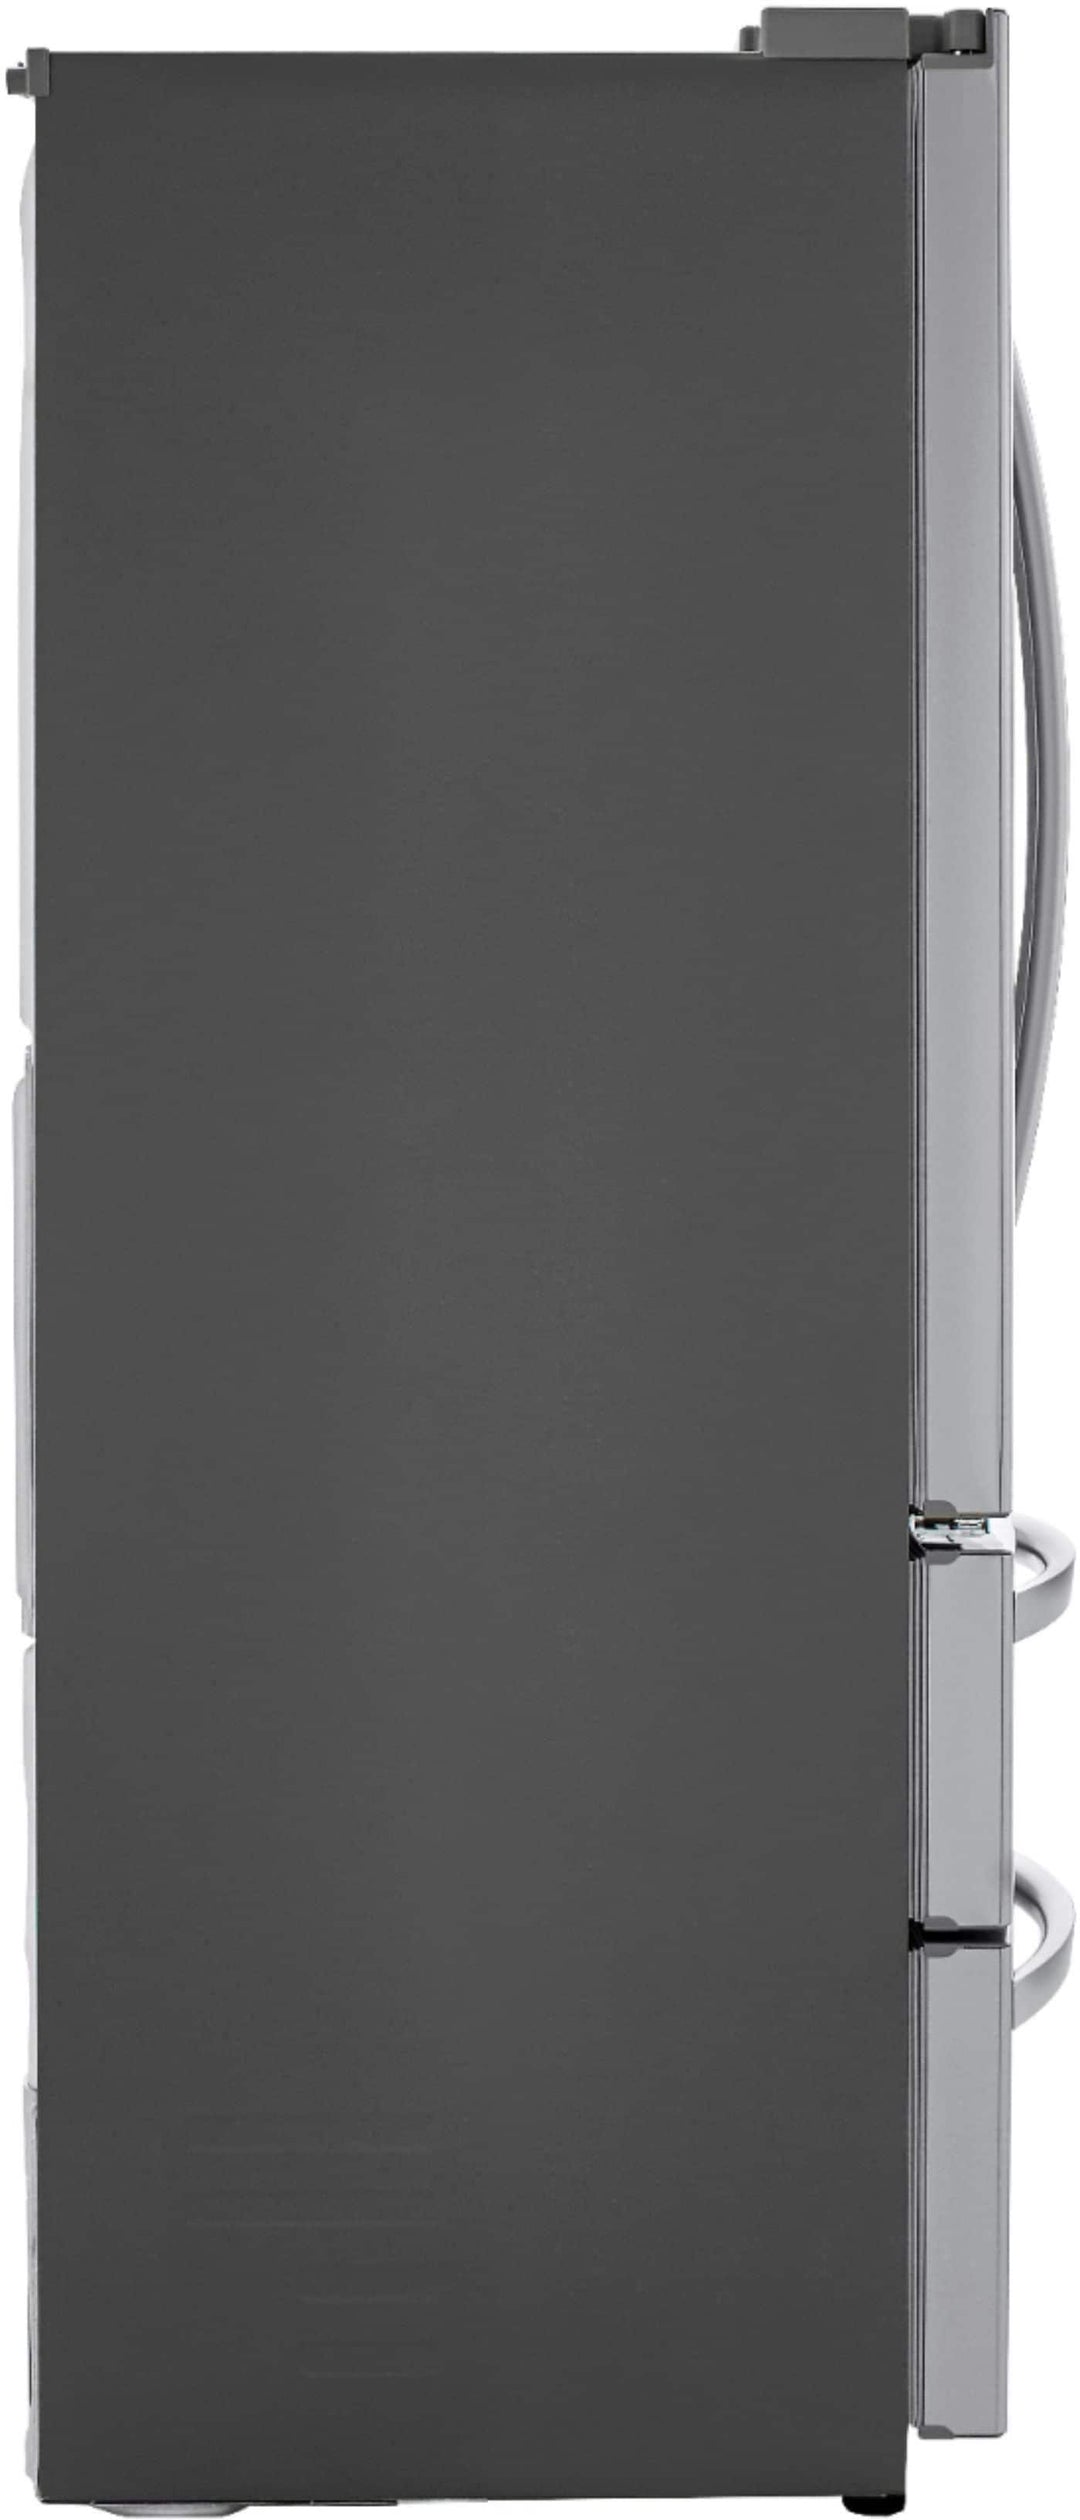 LG - 22.7 Cu. Ft. 4-Door French Door Counter-Depth Refrigerator with Double Freezer and Internal Water Dispenser - Stainless steel_3